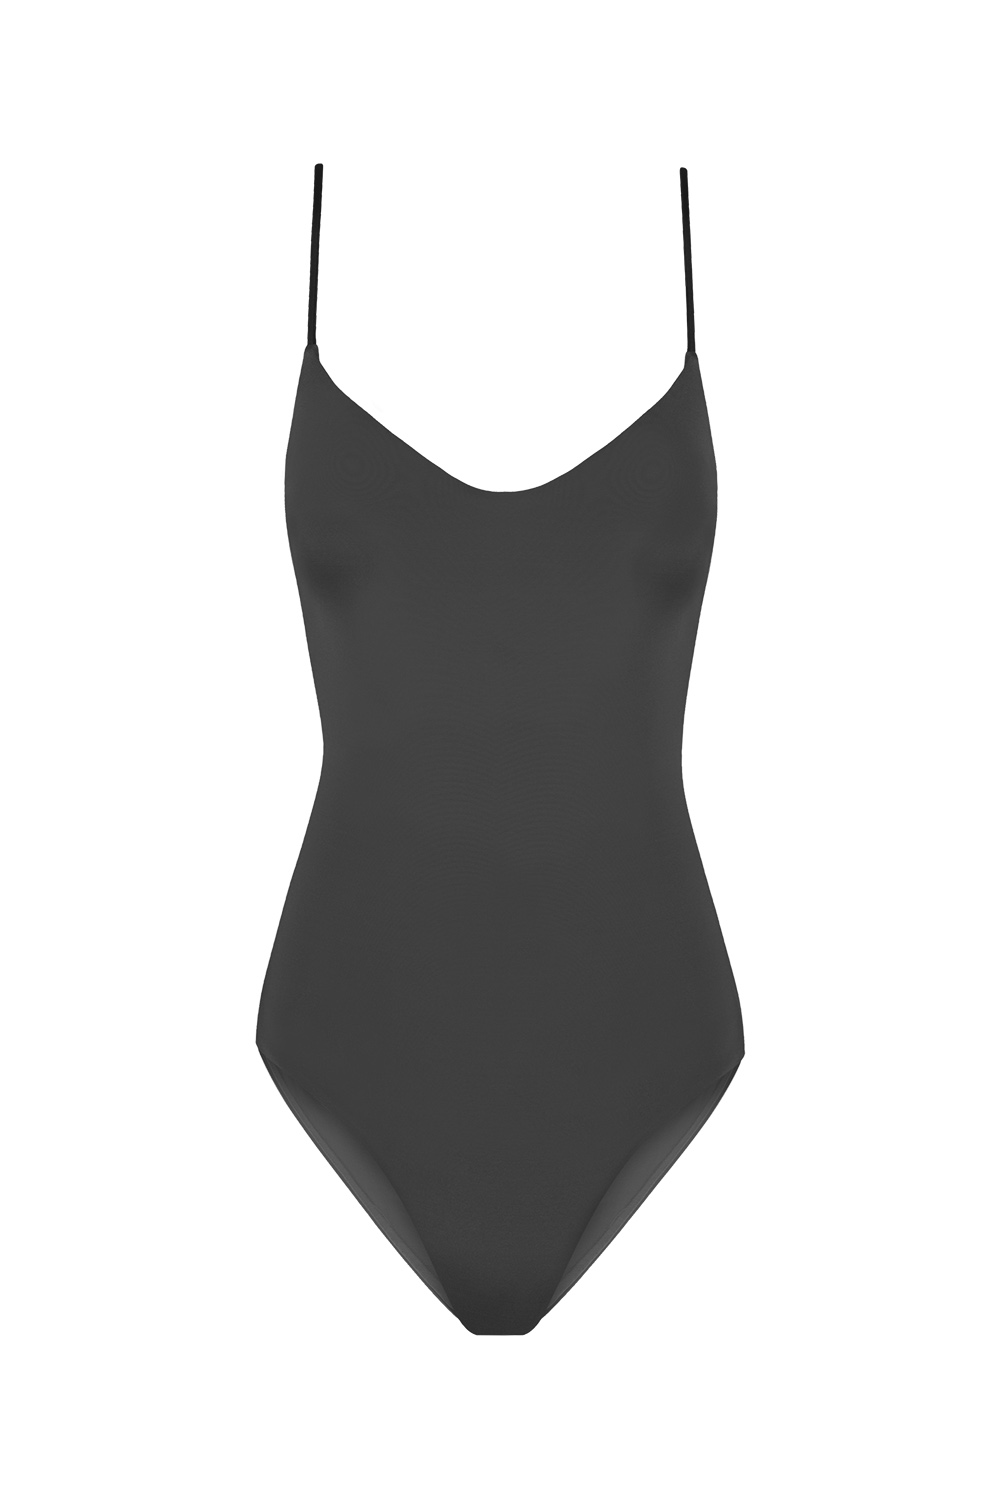 Sustainable Luxury Swimwear / Ropa de baño sostenible, onepiece swimsuit/ bañador ecológico. Aridane onepiece black, econyl, NOW_THEN